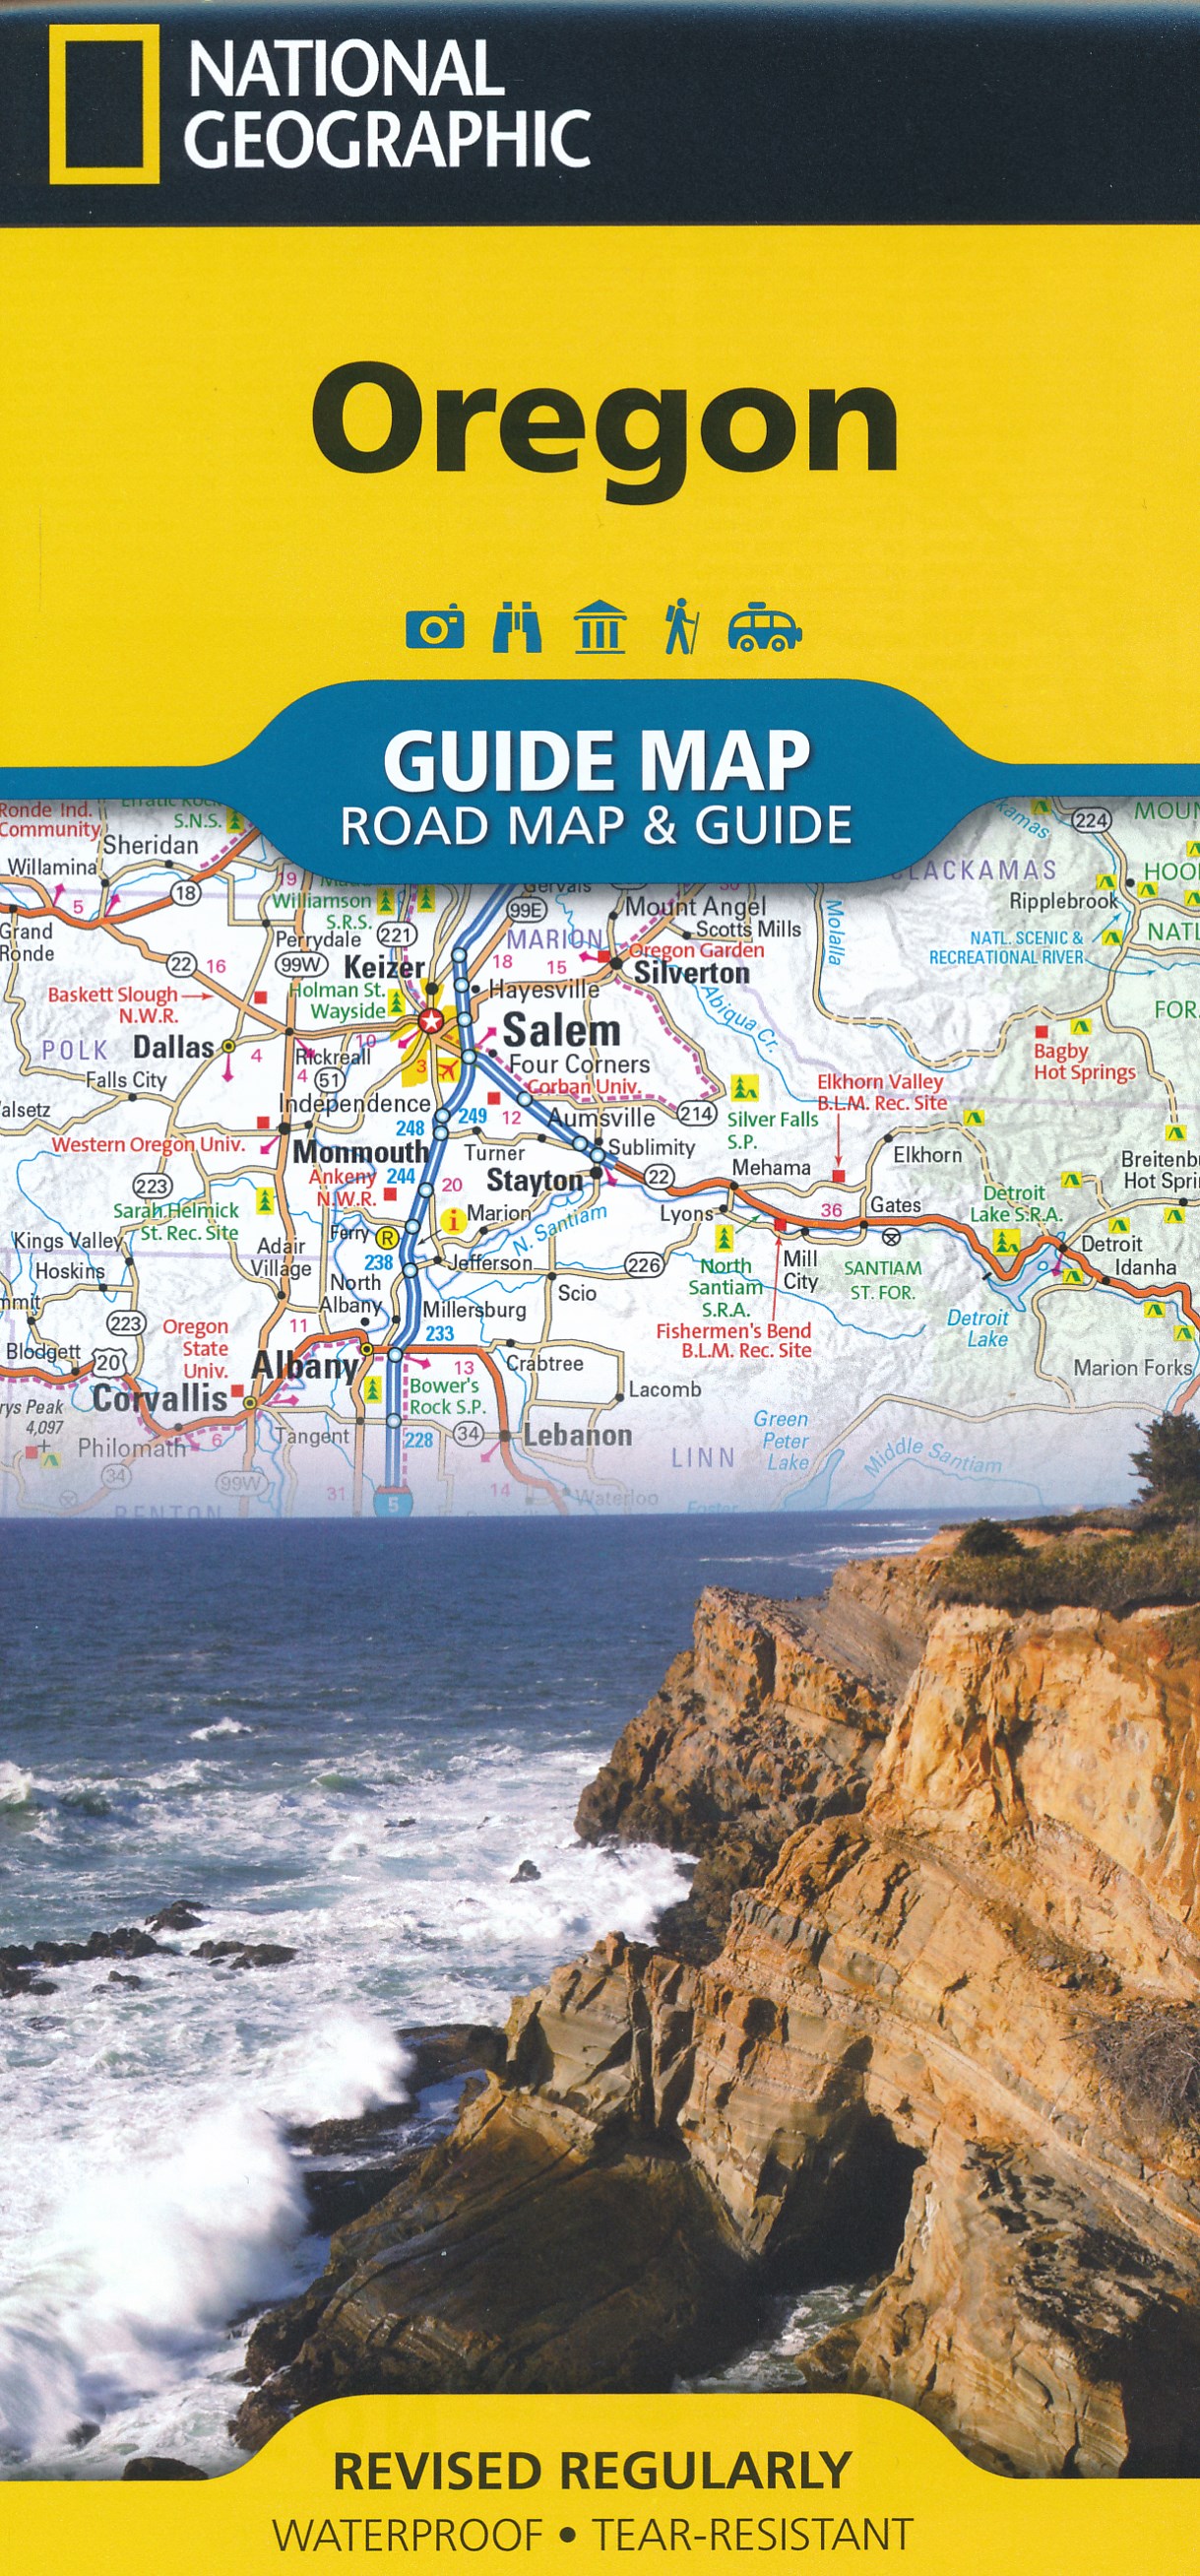 Online bestellen: Wegenkaart - landkaart Guide Map Oregon | National Geographic